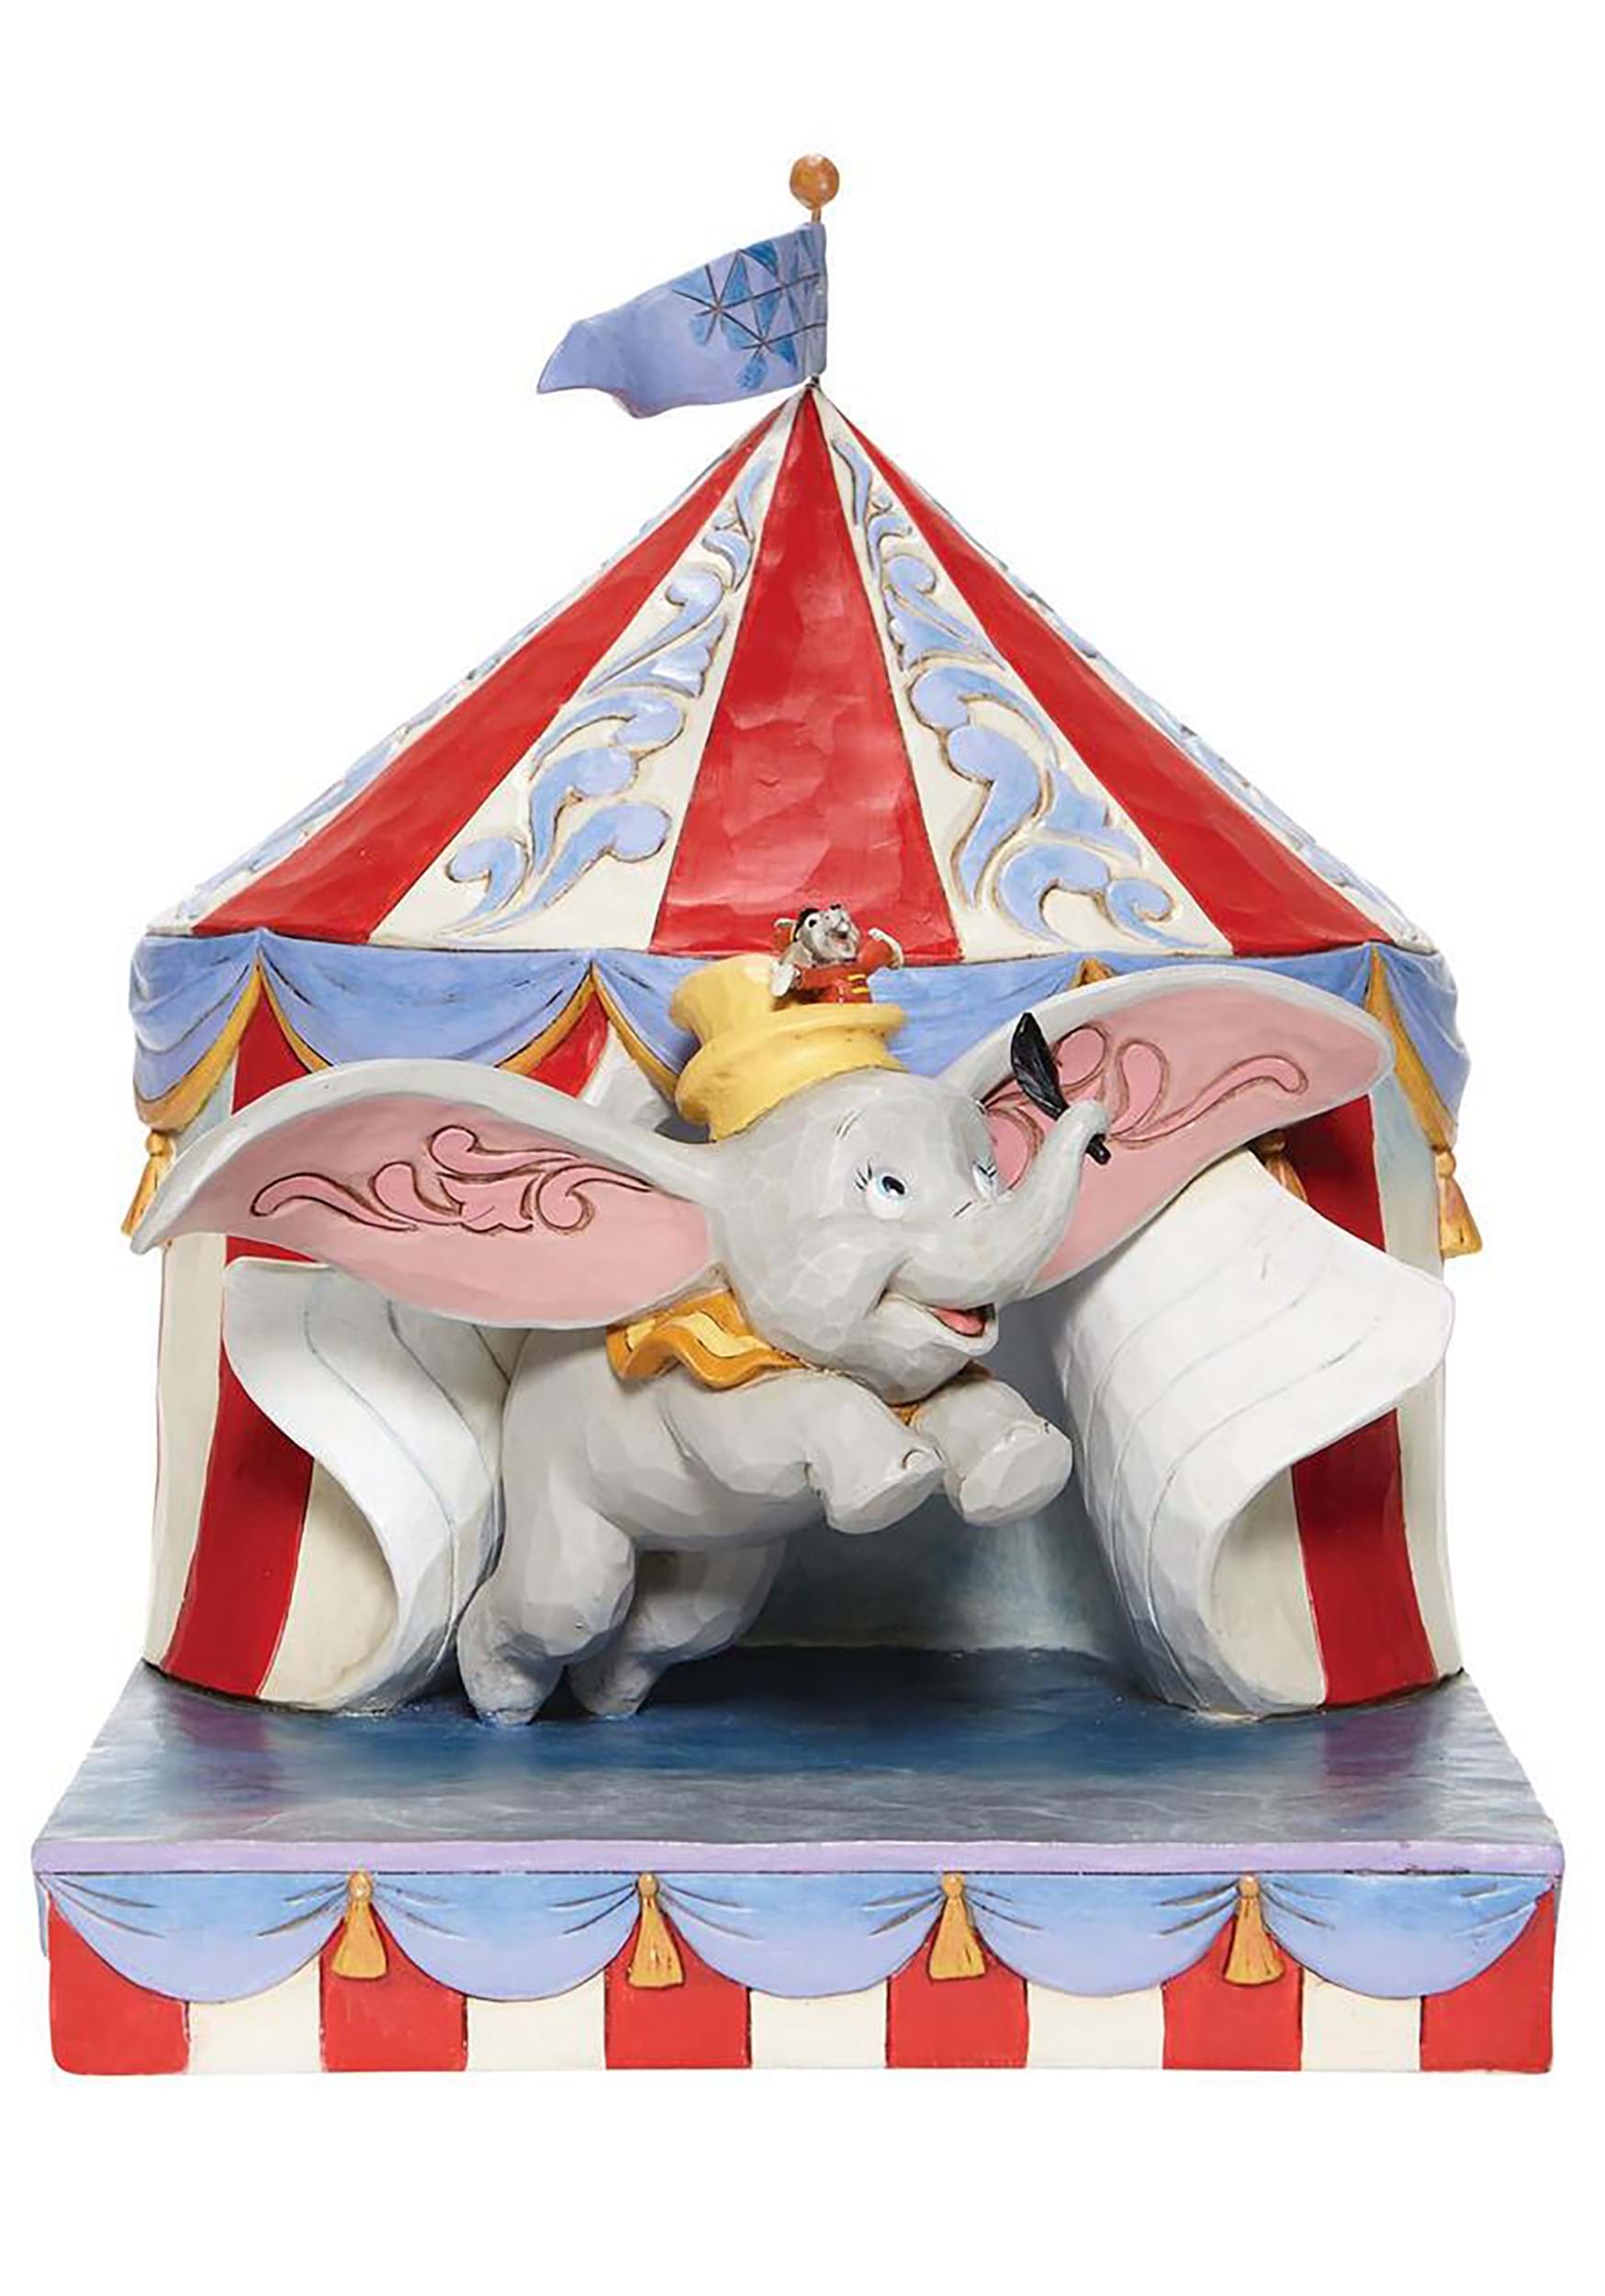 Image of Jim Shore Jim Shore Dumbo Flying Out of Tent Scene Disney Diorama